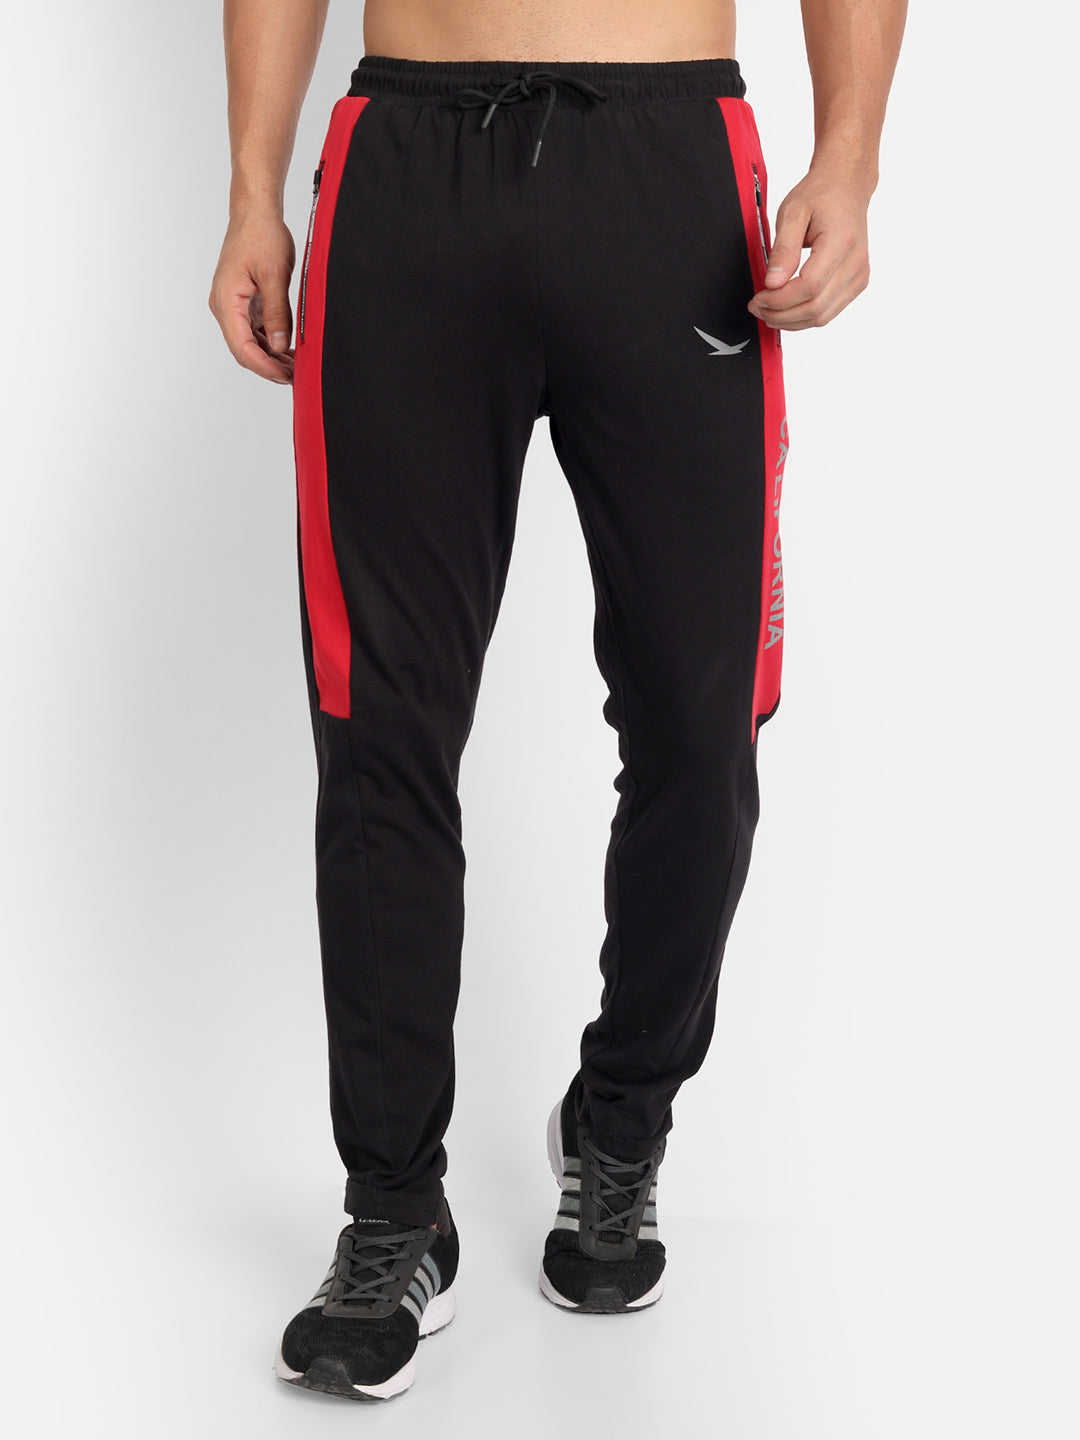 Men's Track Pants & Shorts | Online, Bulk, Wholesale & Custom Orders |  Qualitops